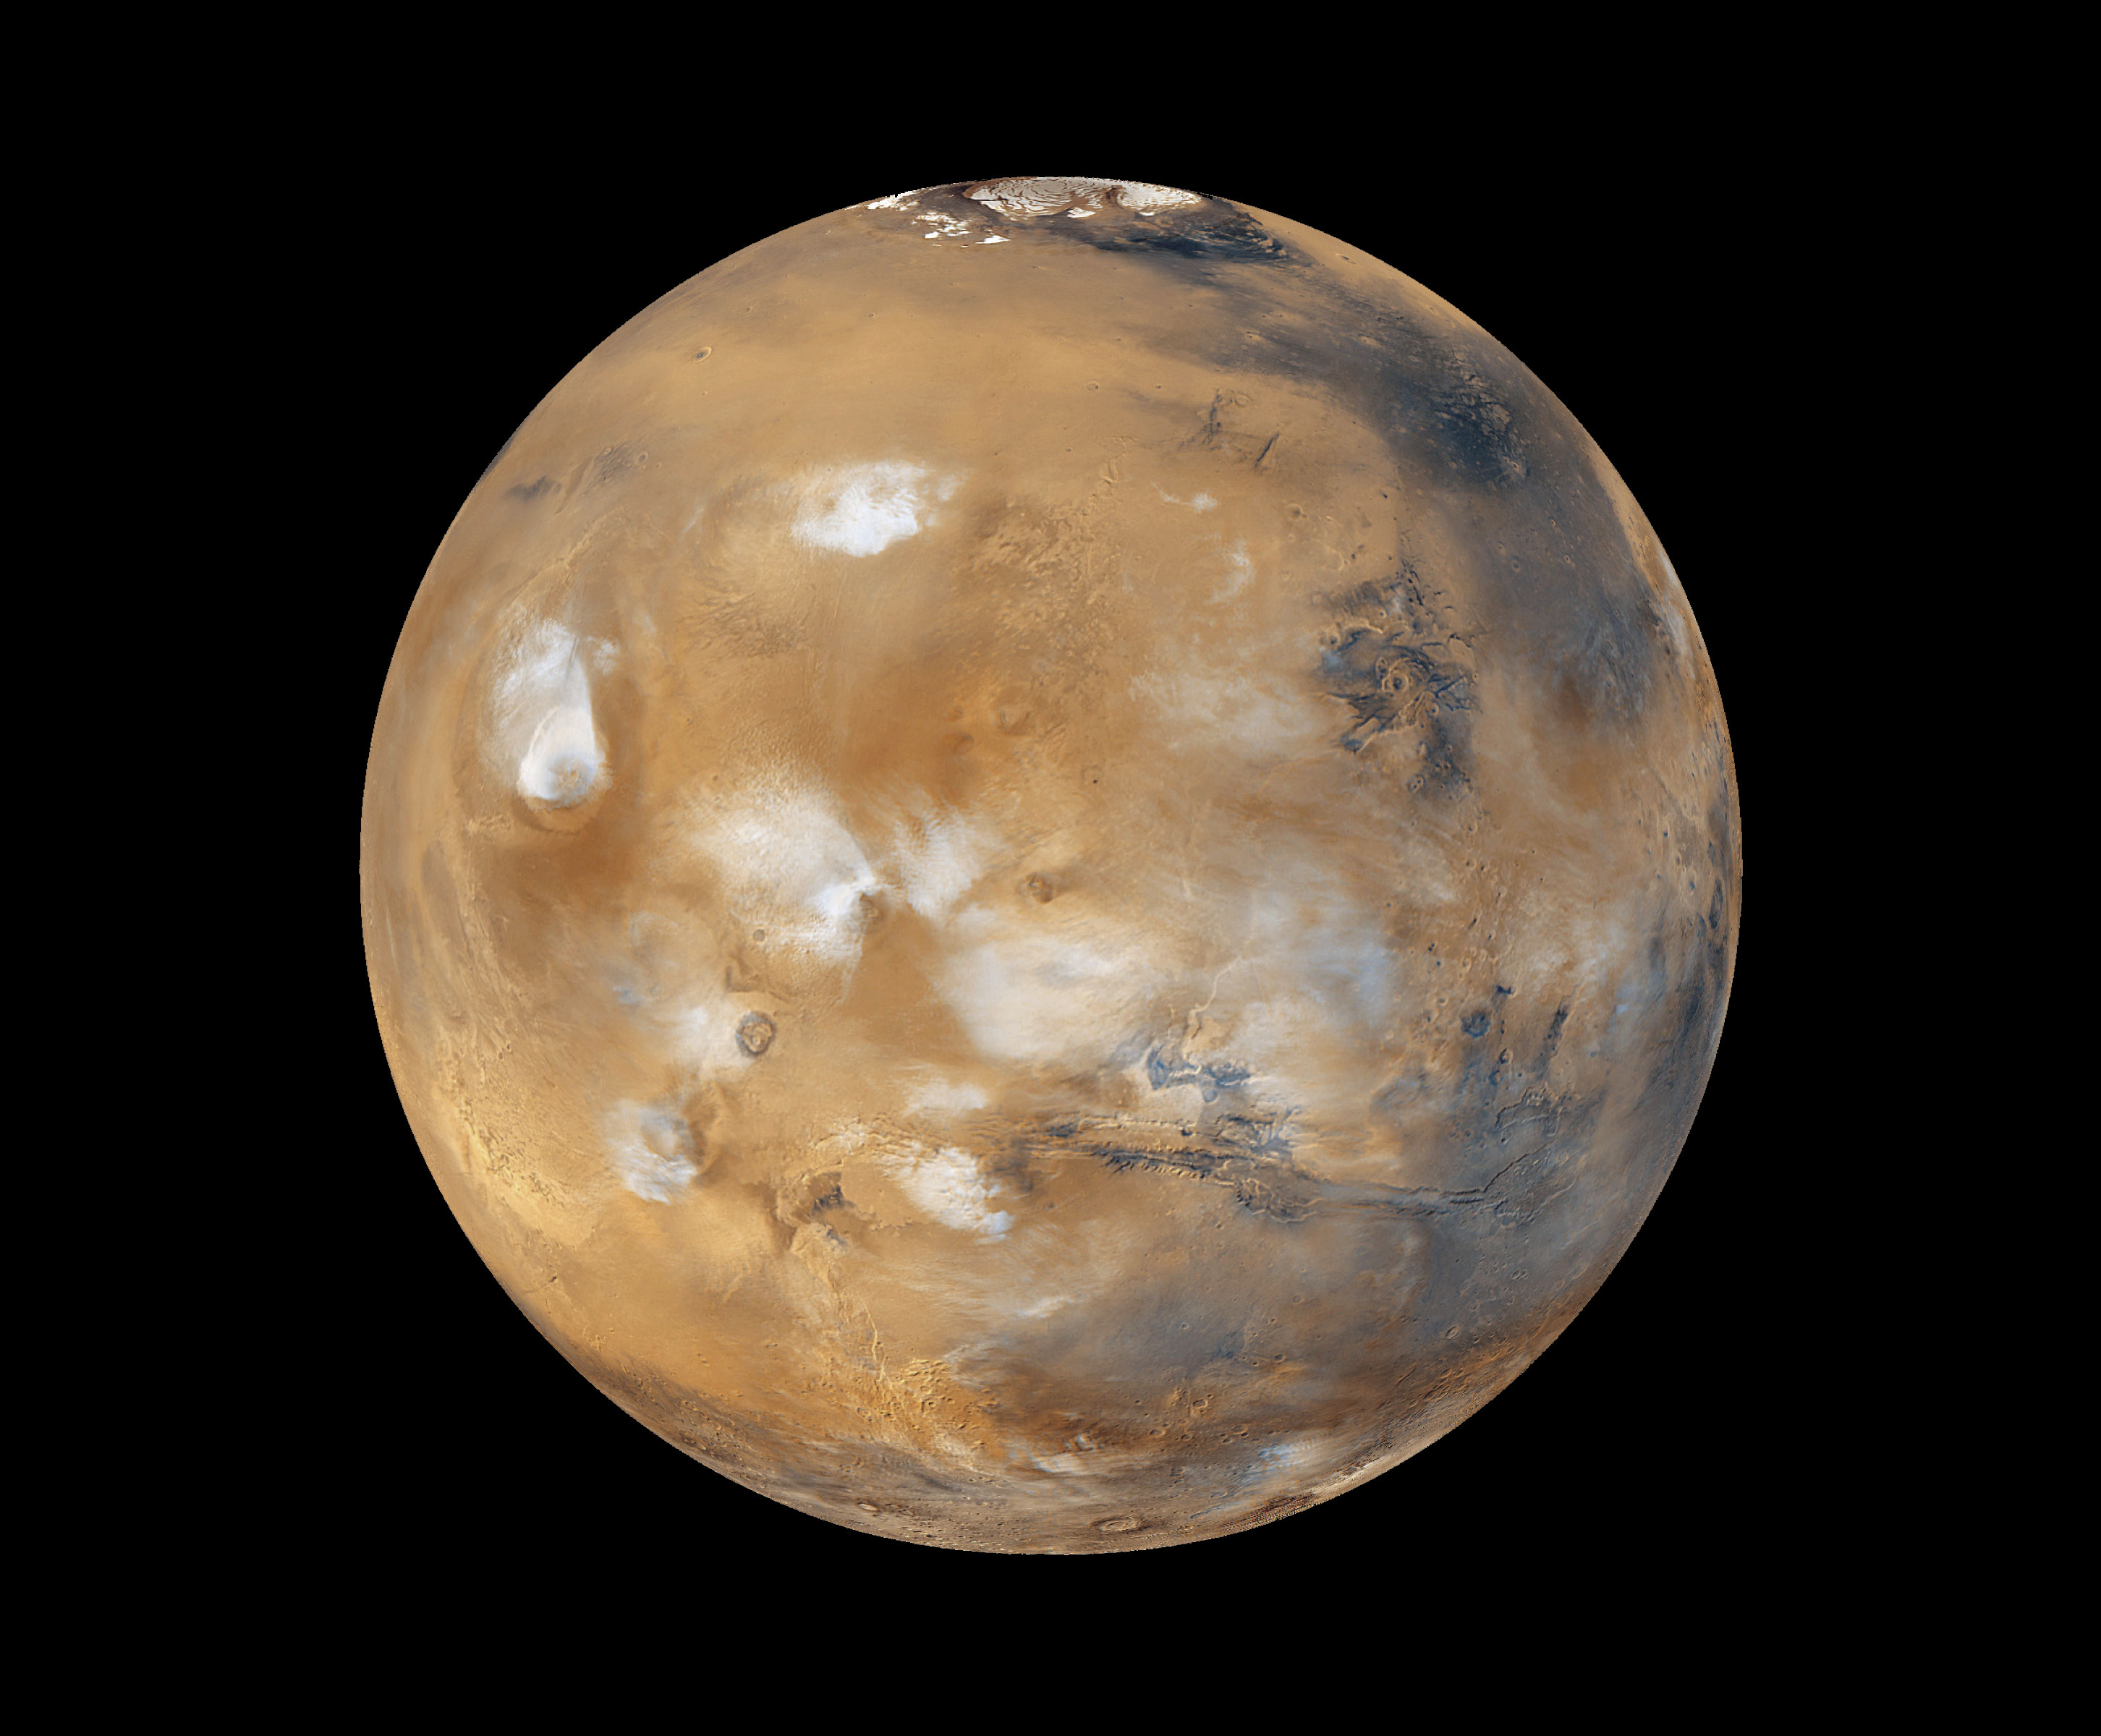 ОАЕ пращат сонда до Марс